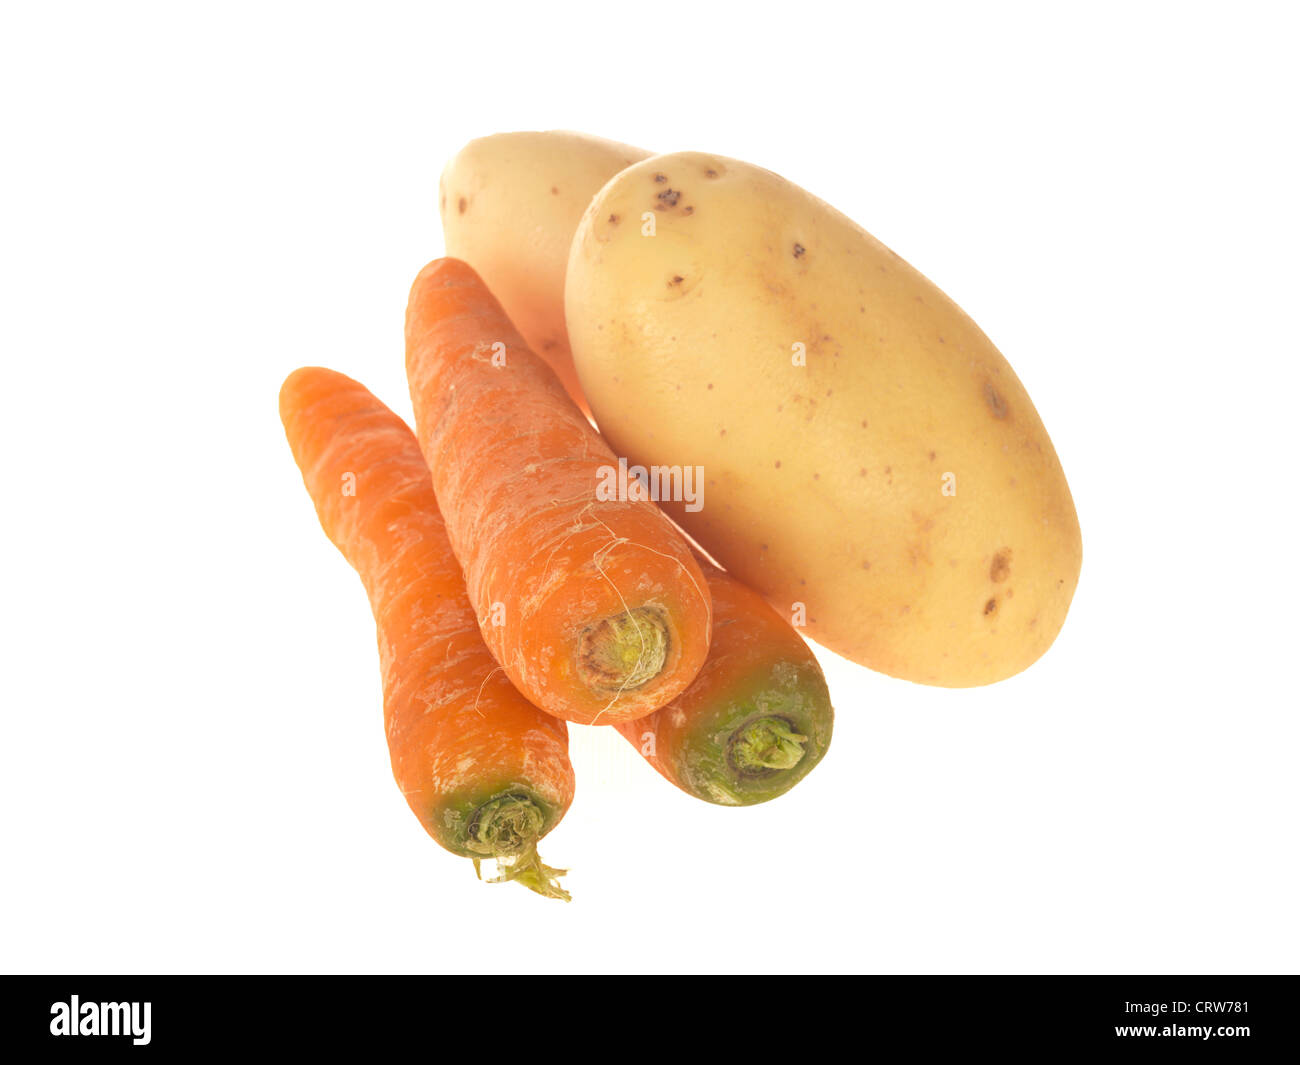 Potatoes and Carrots Stock Photo